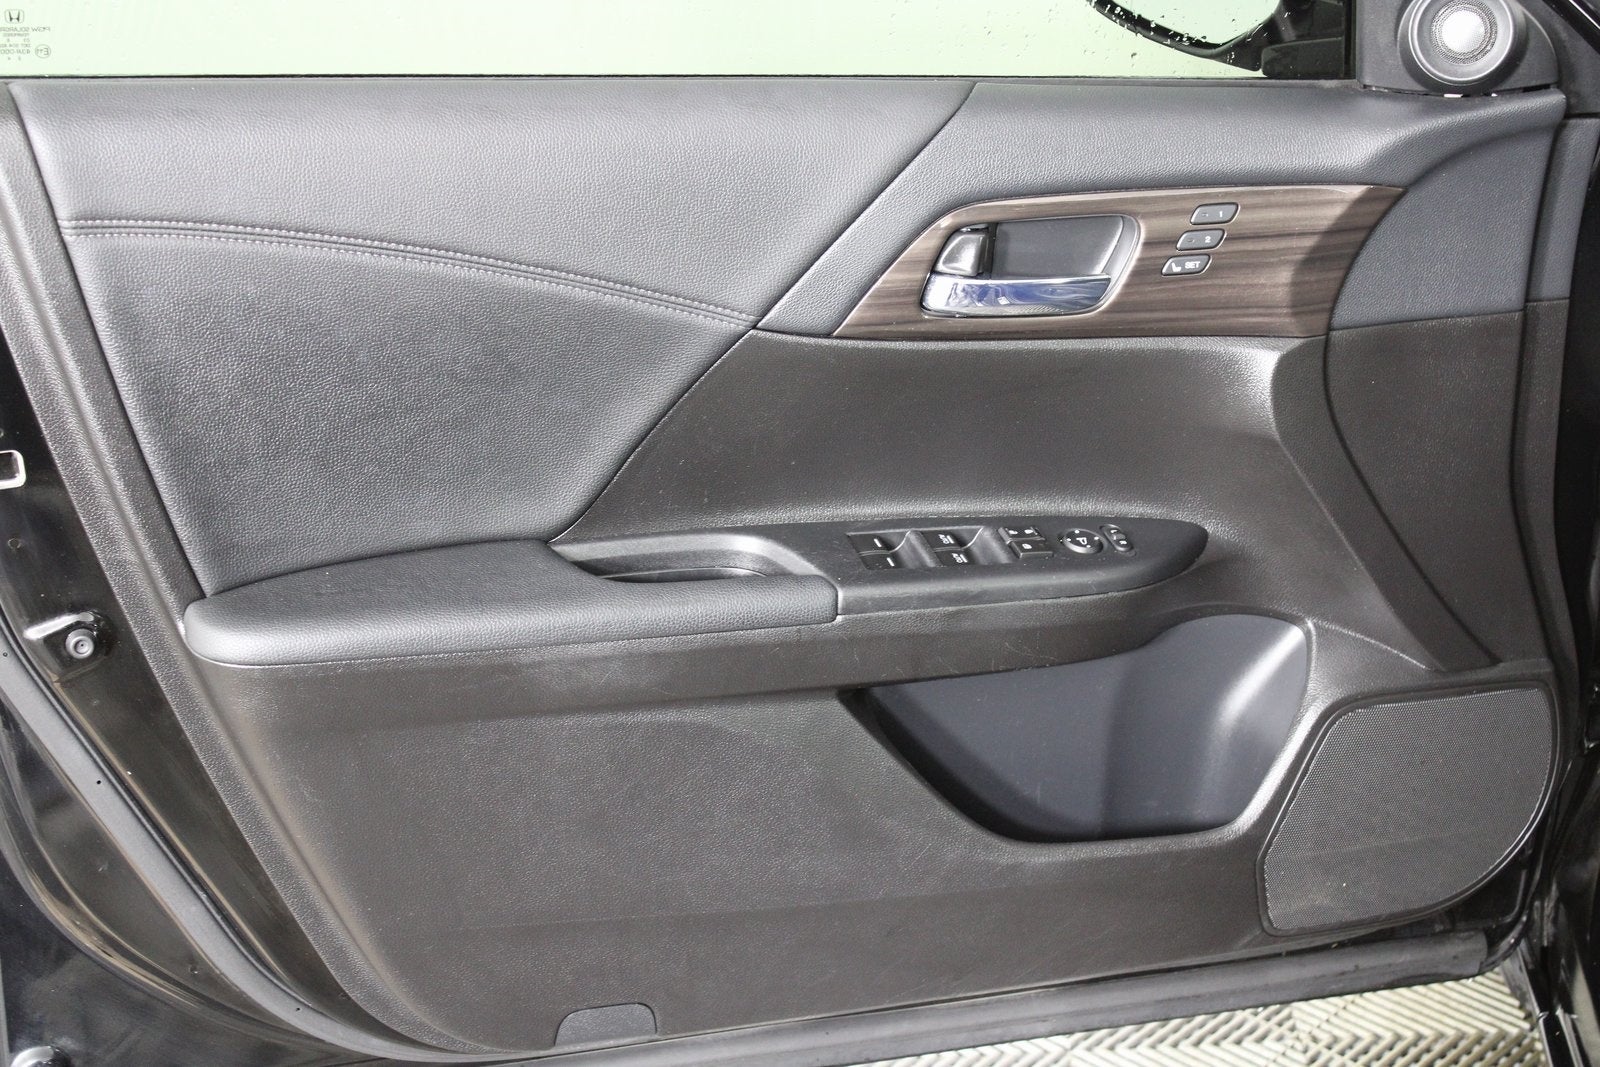 2016 Honda Accord EX-L w/Navigation and Honda Sensing